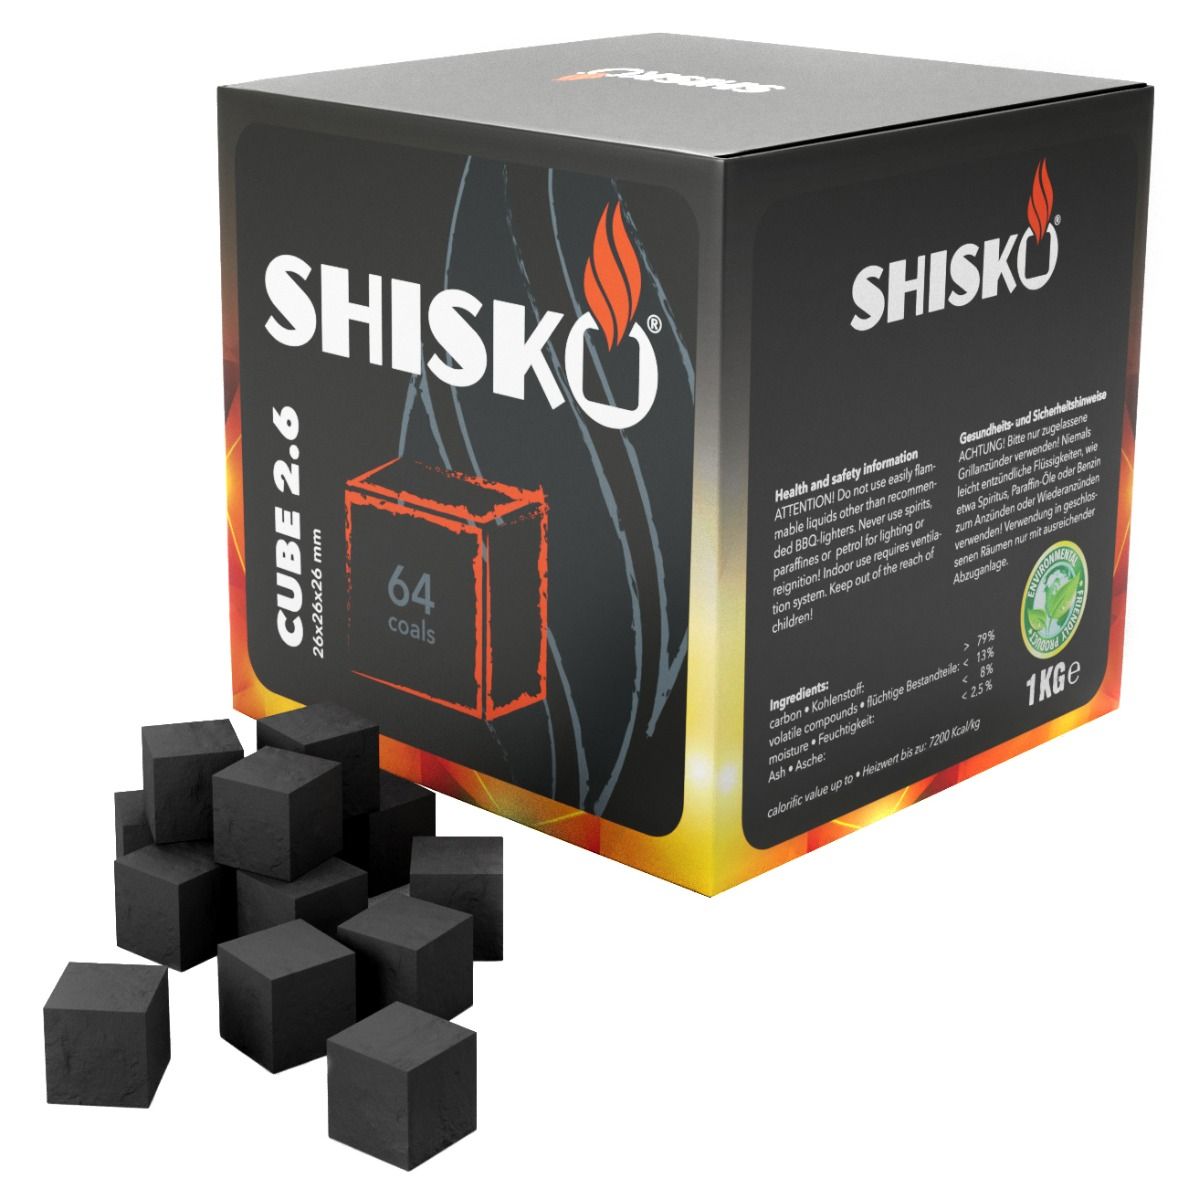 Shisko Naturkohle 26MM - 1kg - Dampfpalast - E-Zigarette Online Kaufen